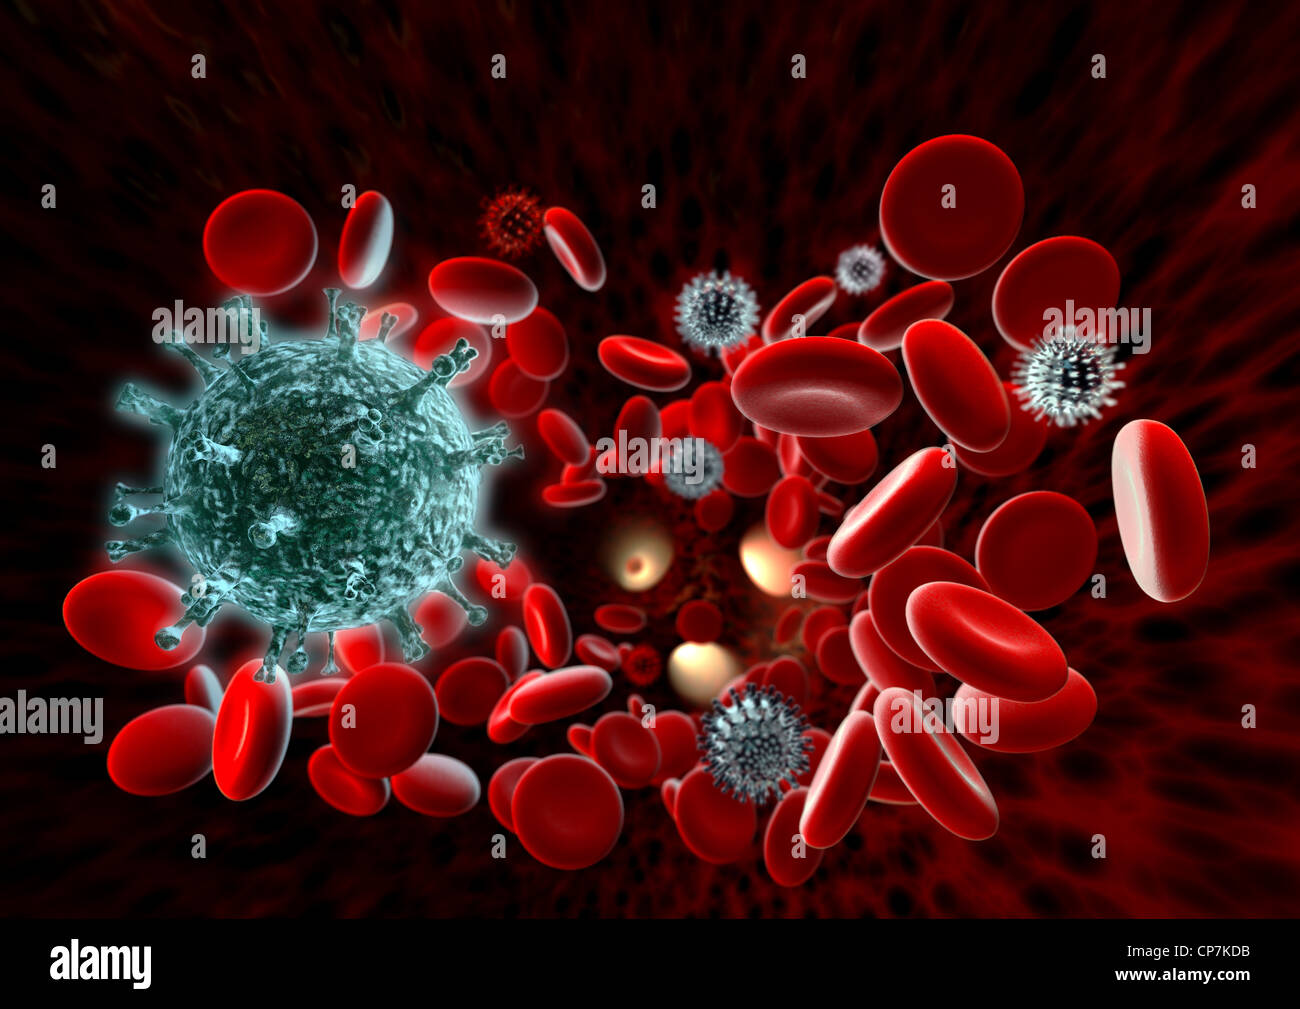 Virus in blood - Scanning Electron Microscopy stylised Stock Photo